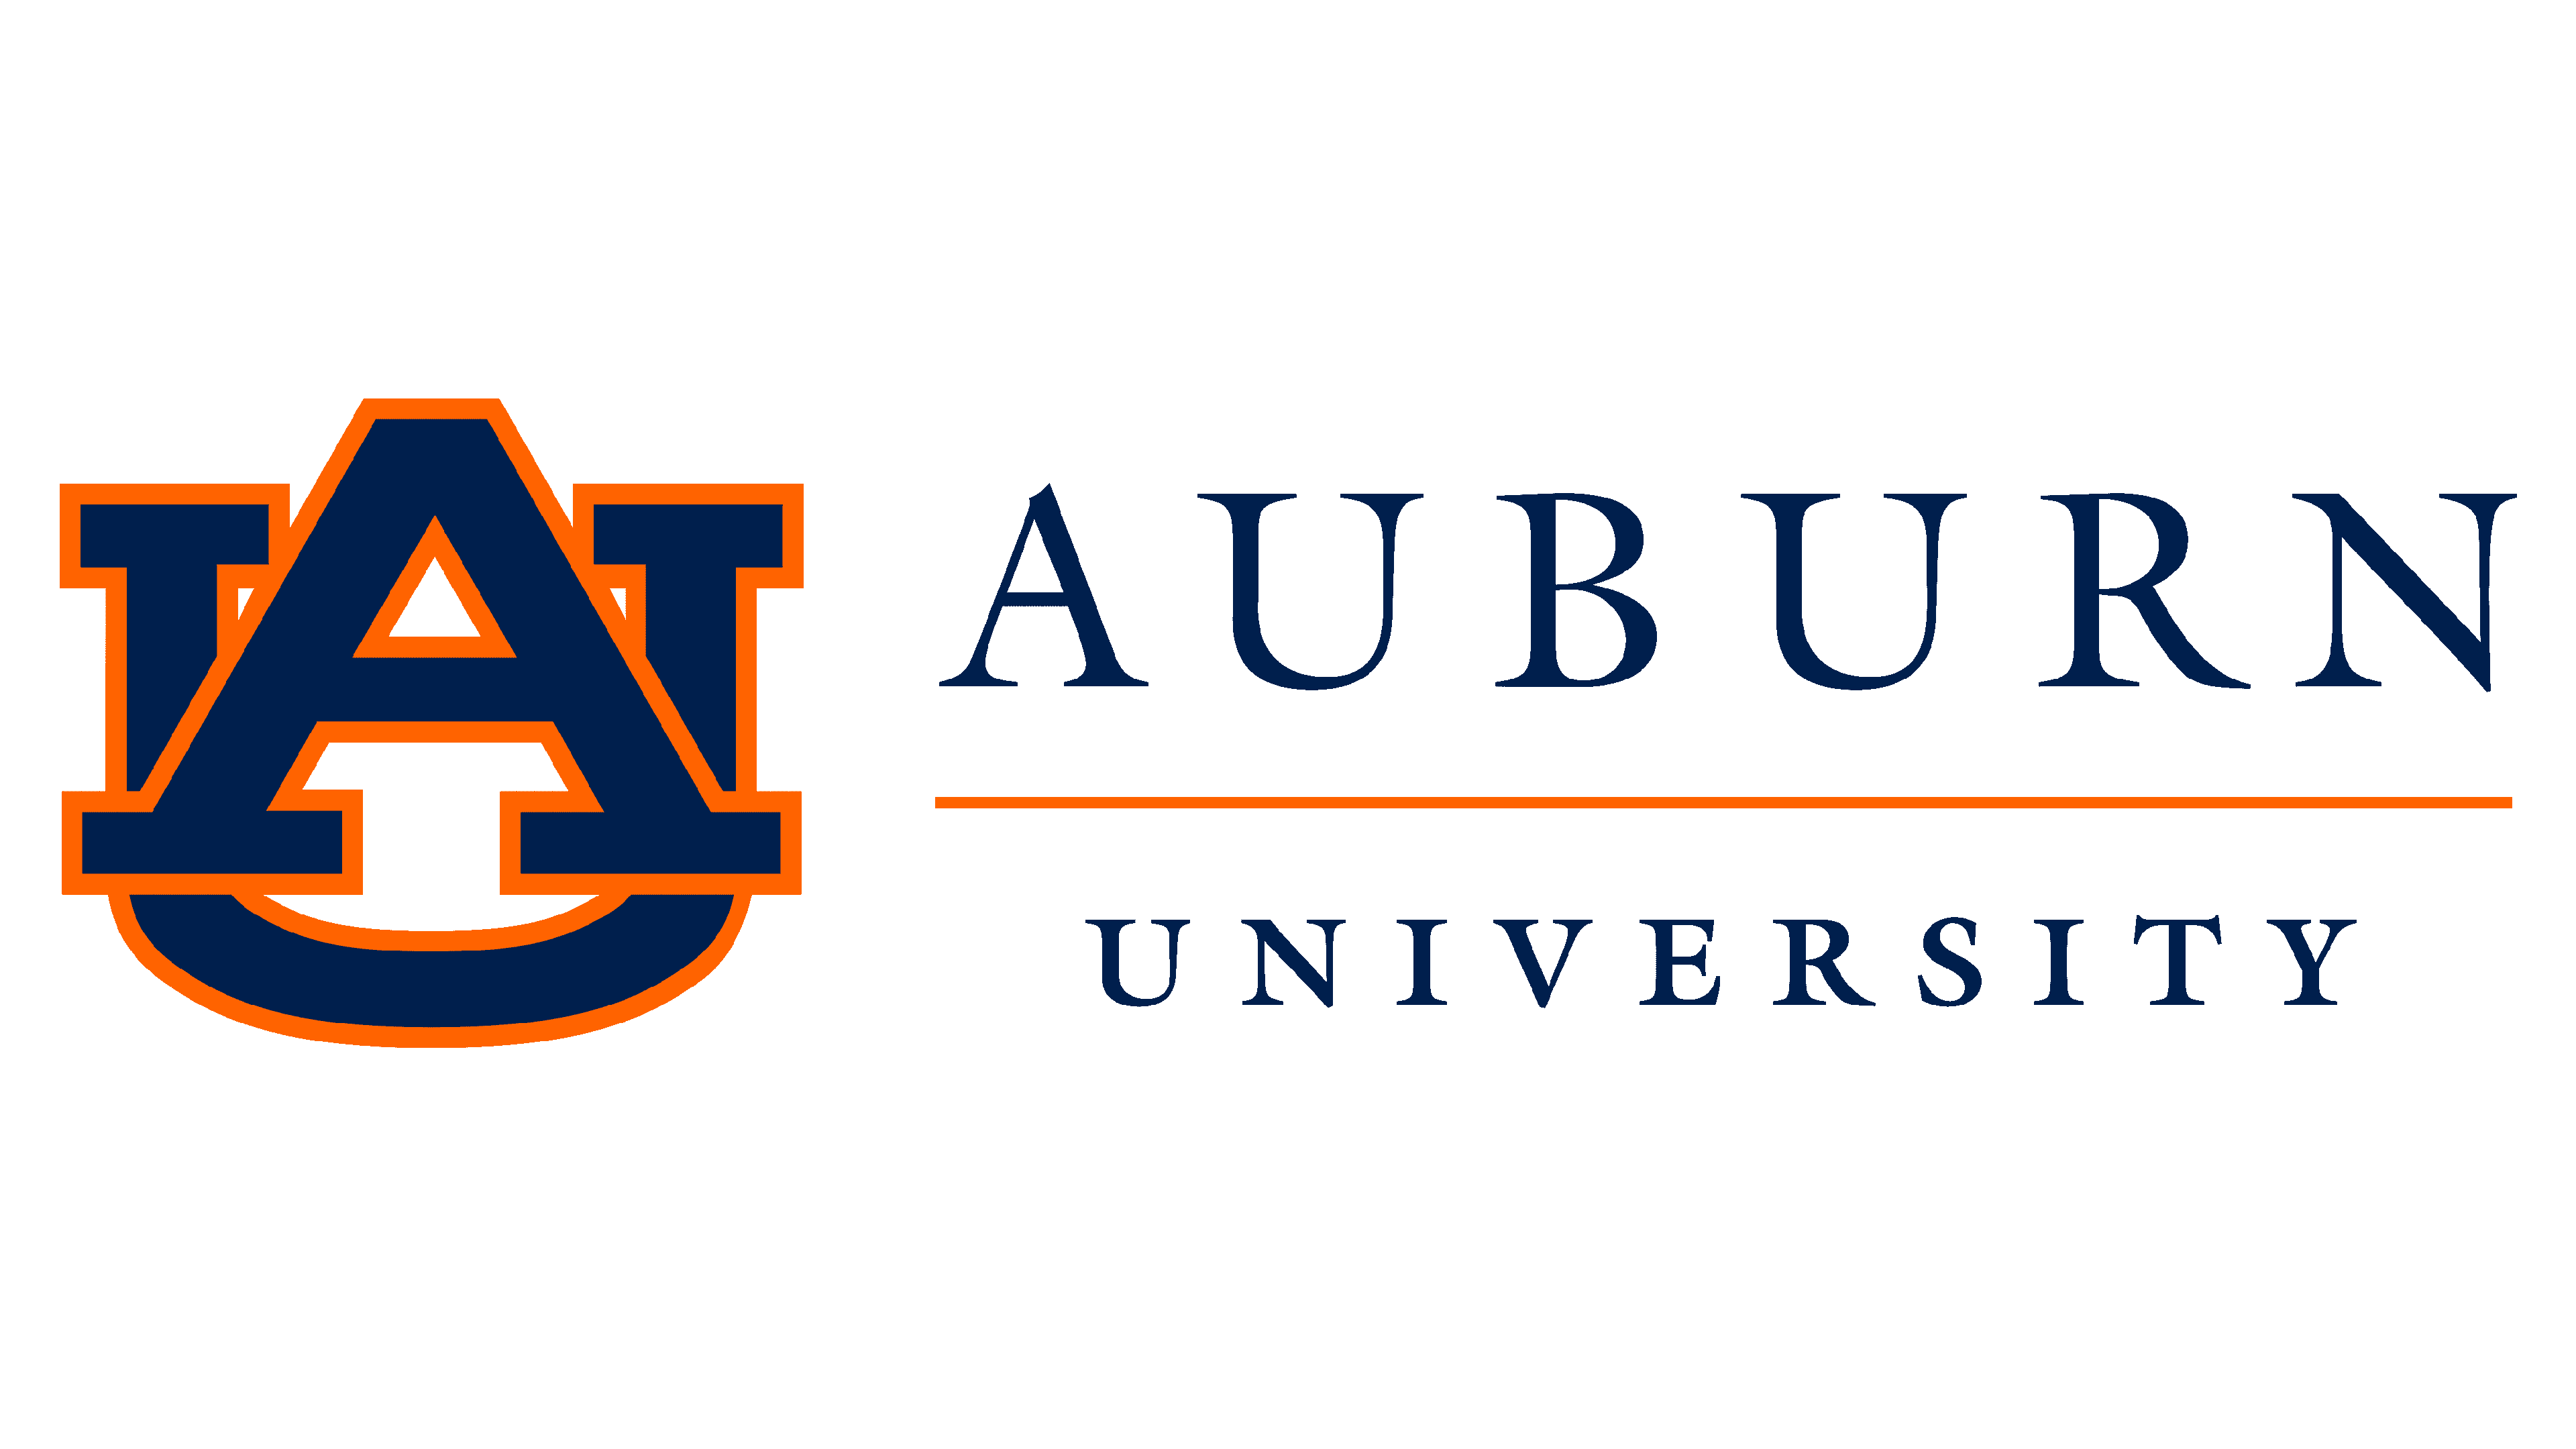 auburn university logo black and white